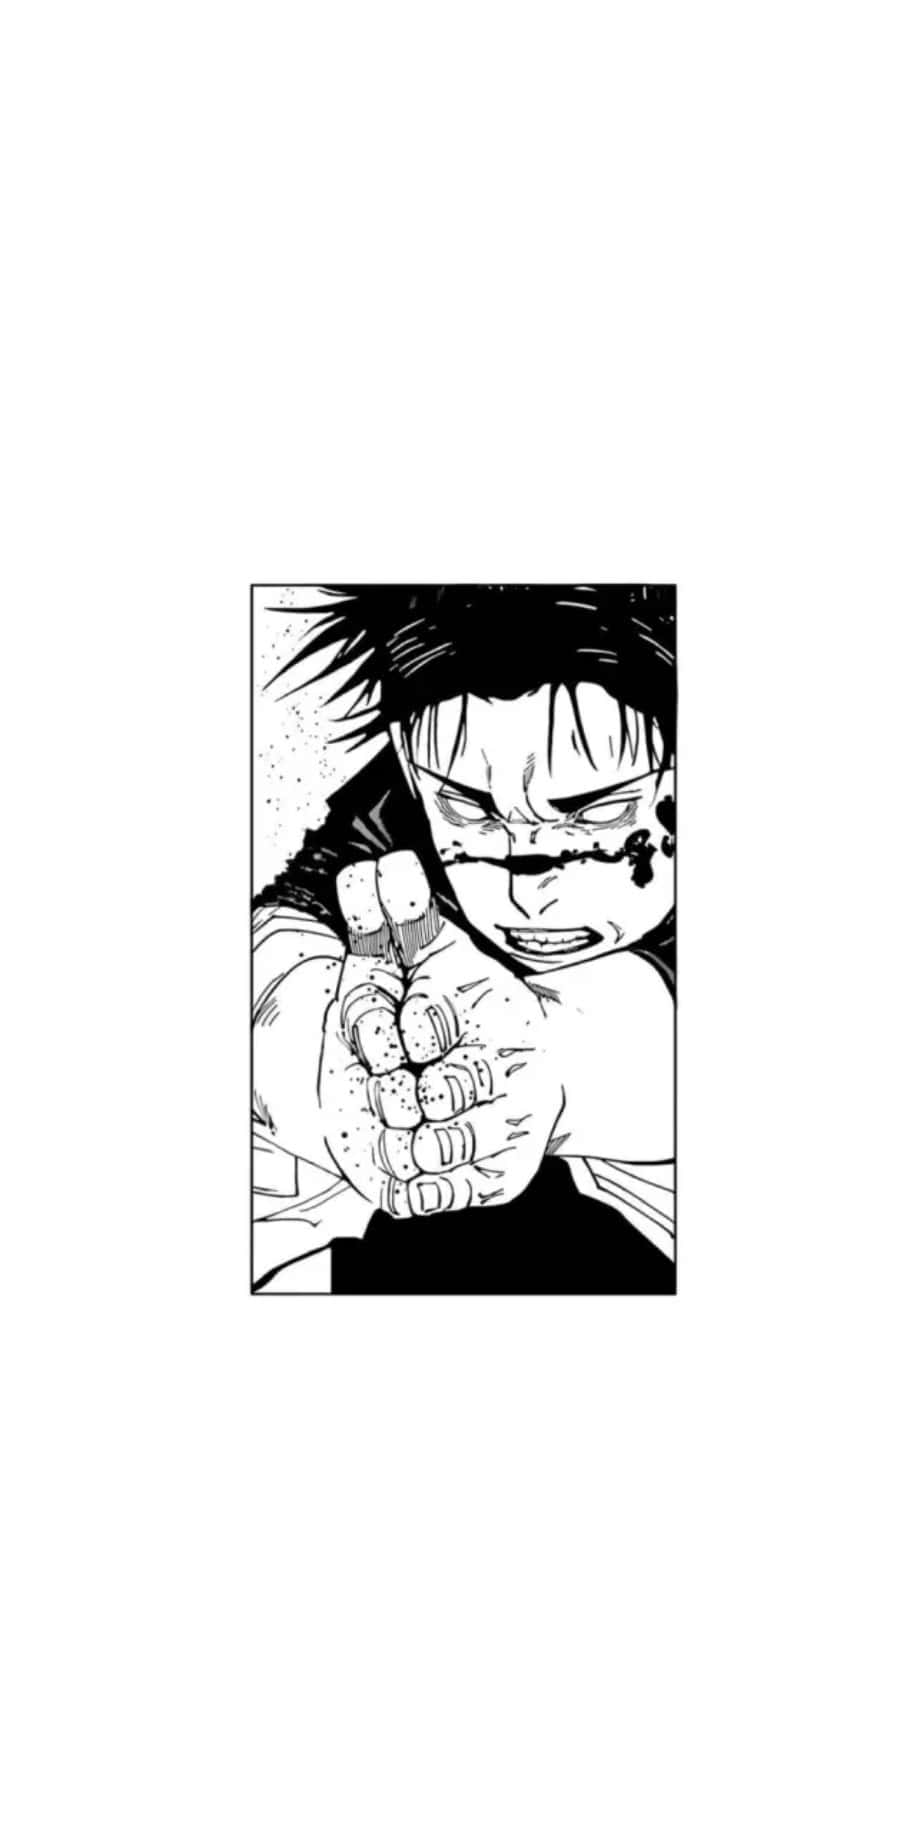 Manga Character Intense Gesture.jpg Wallpaper